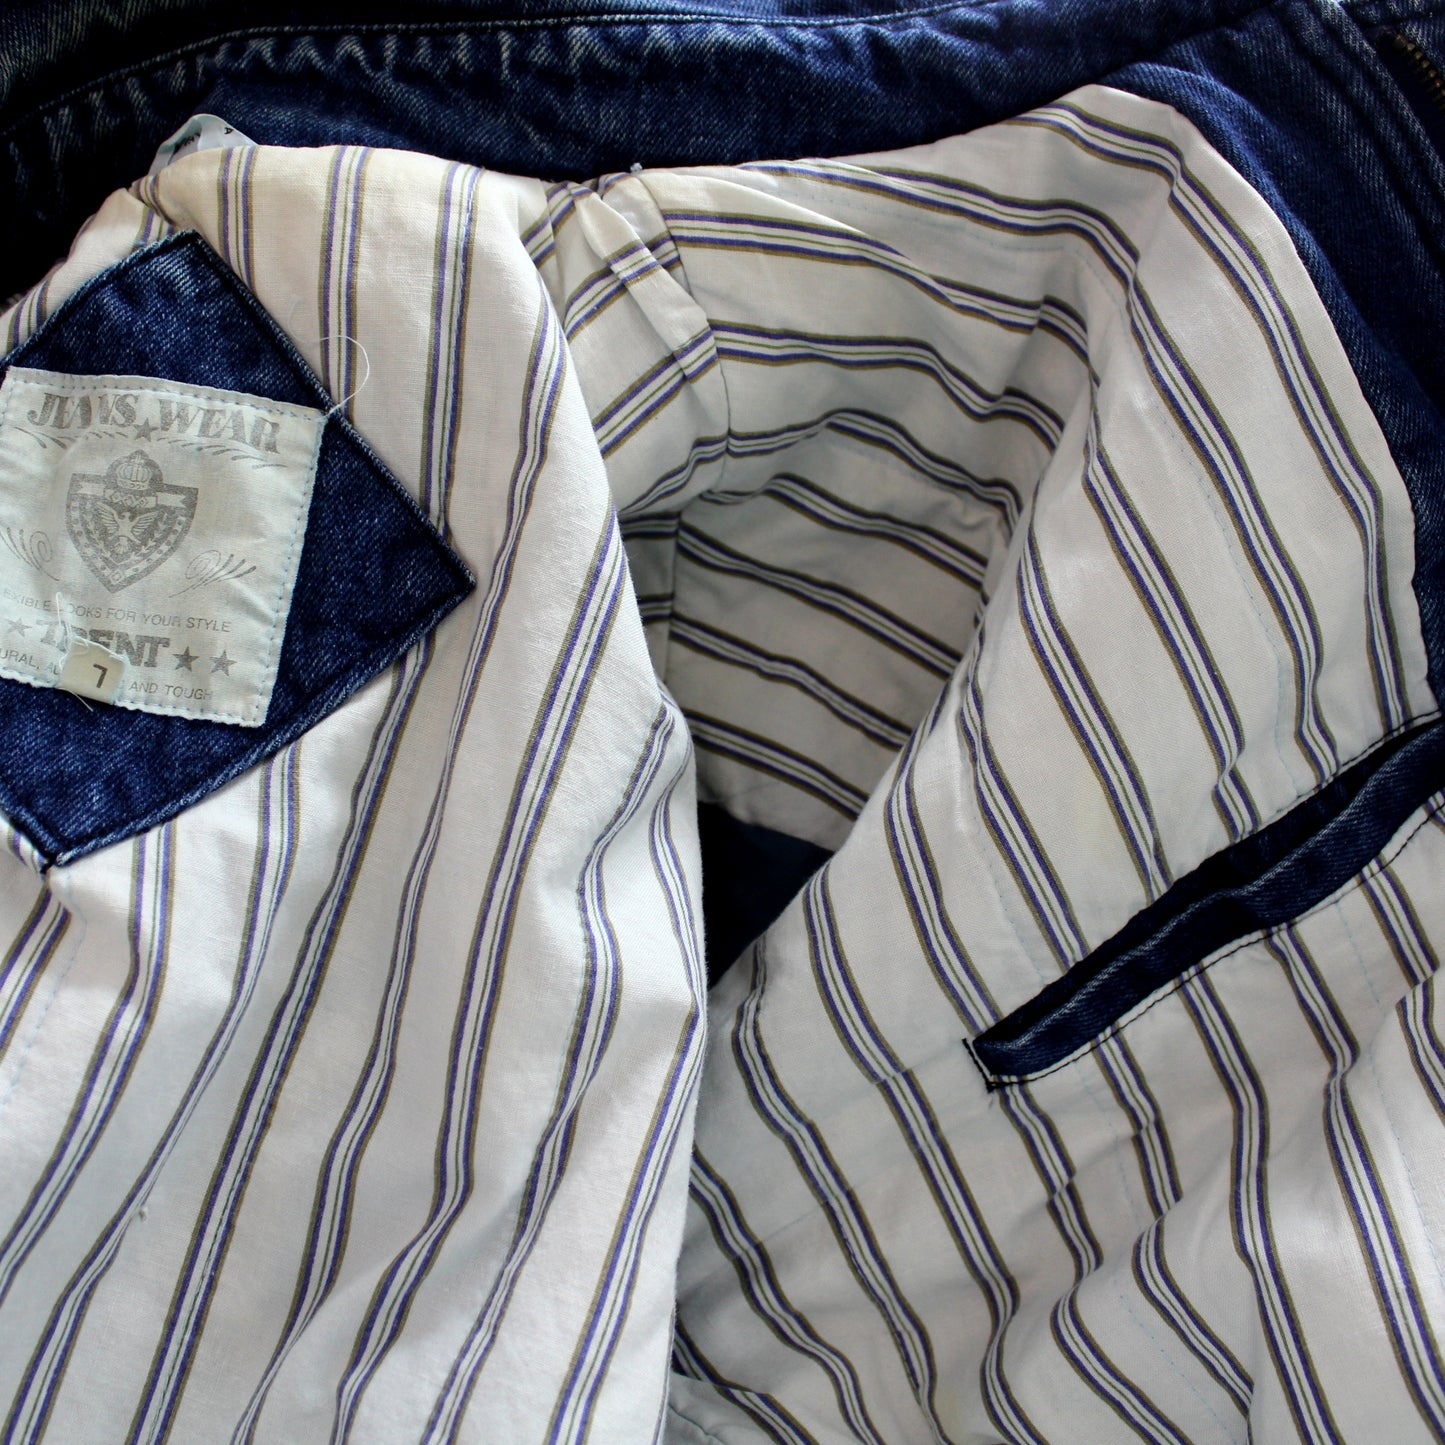 Jeans Wear Trent Blue Denim Cotton Jacket Lined Blue White Stripe Great Cut Size L inside pocket